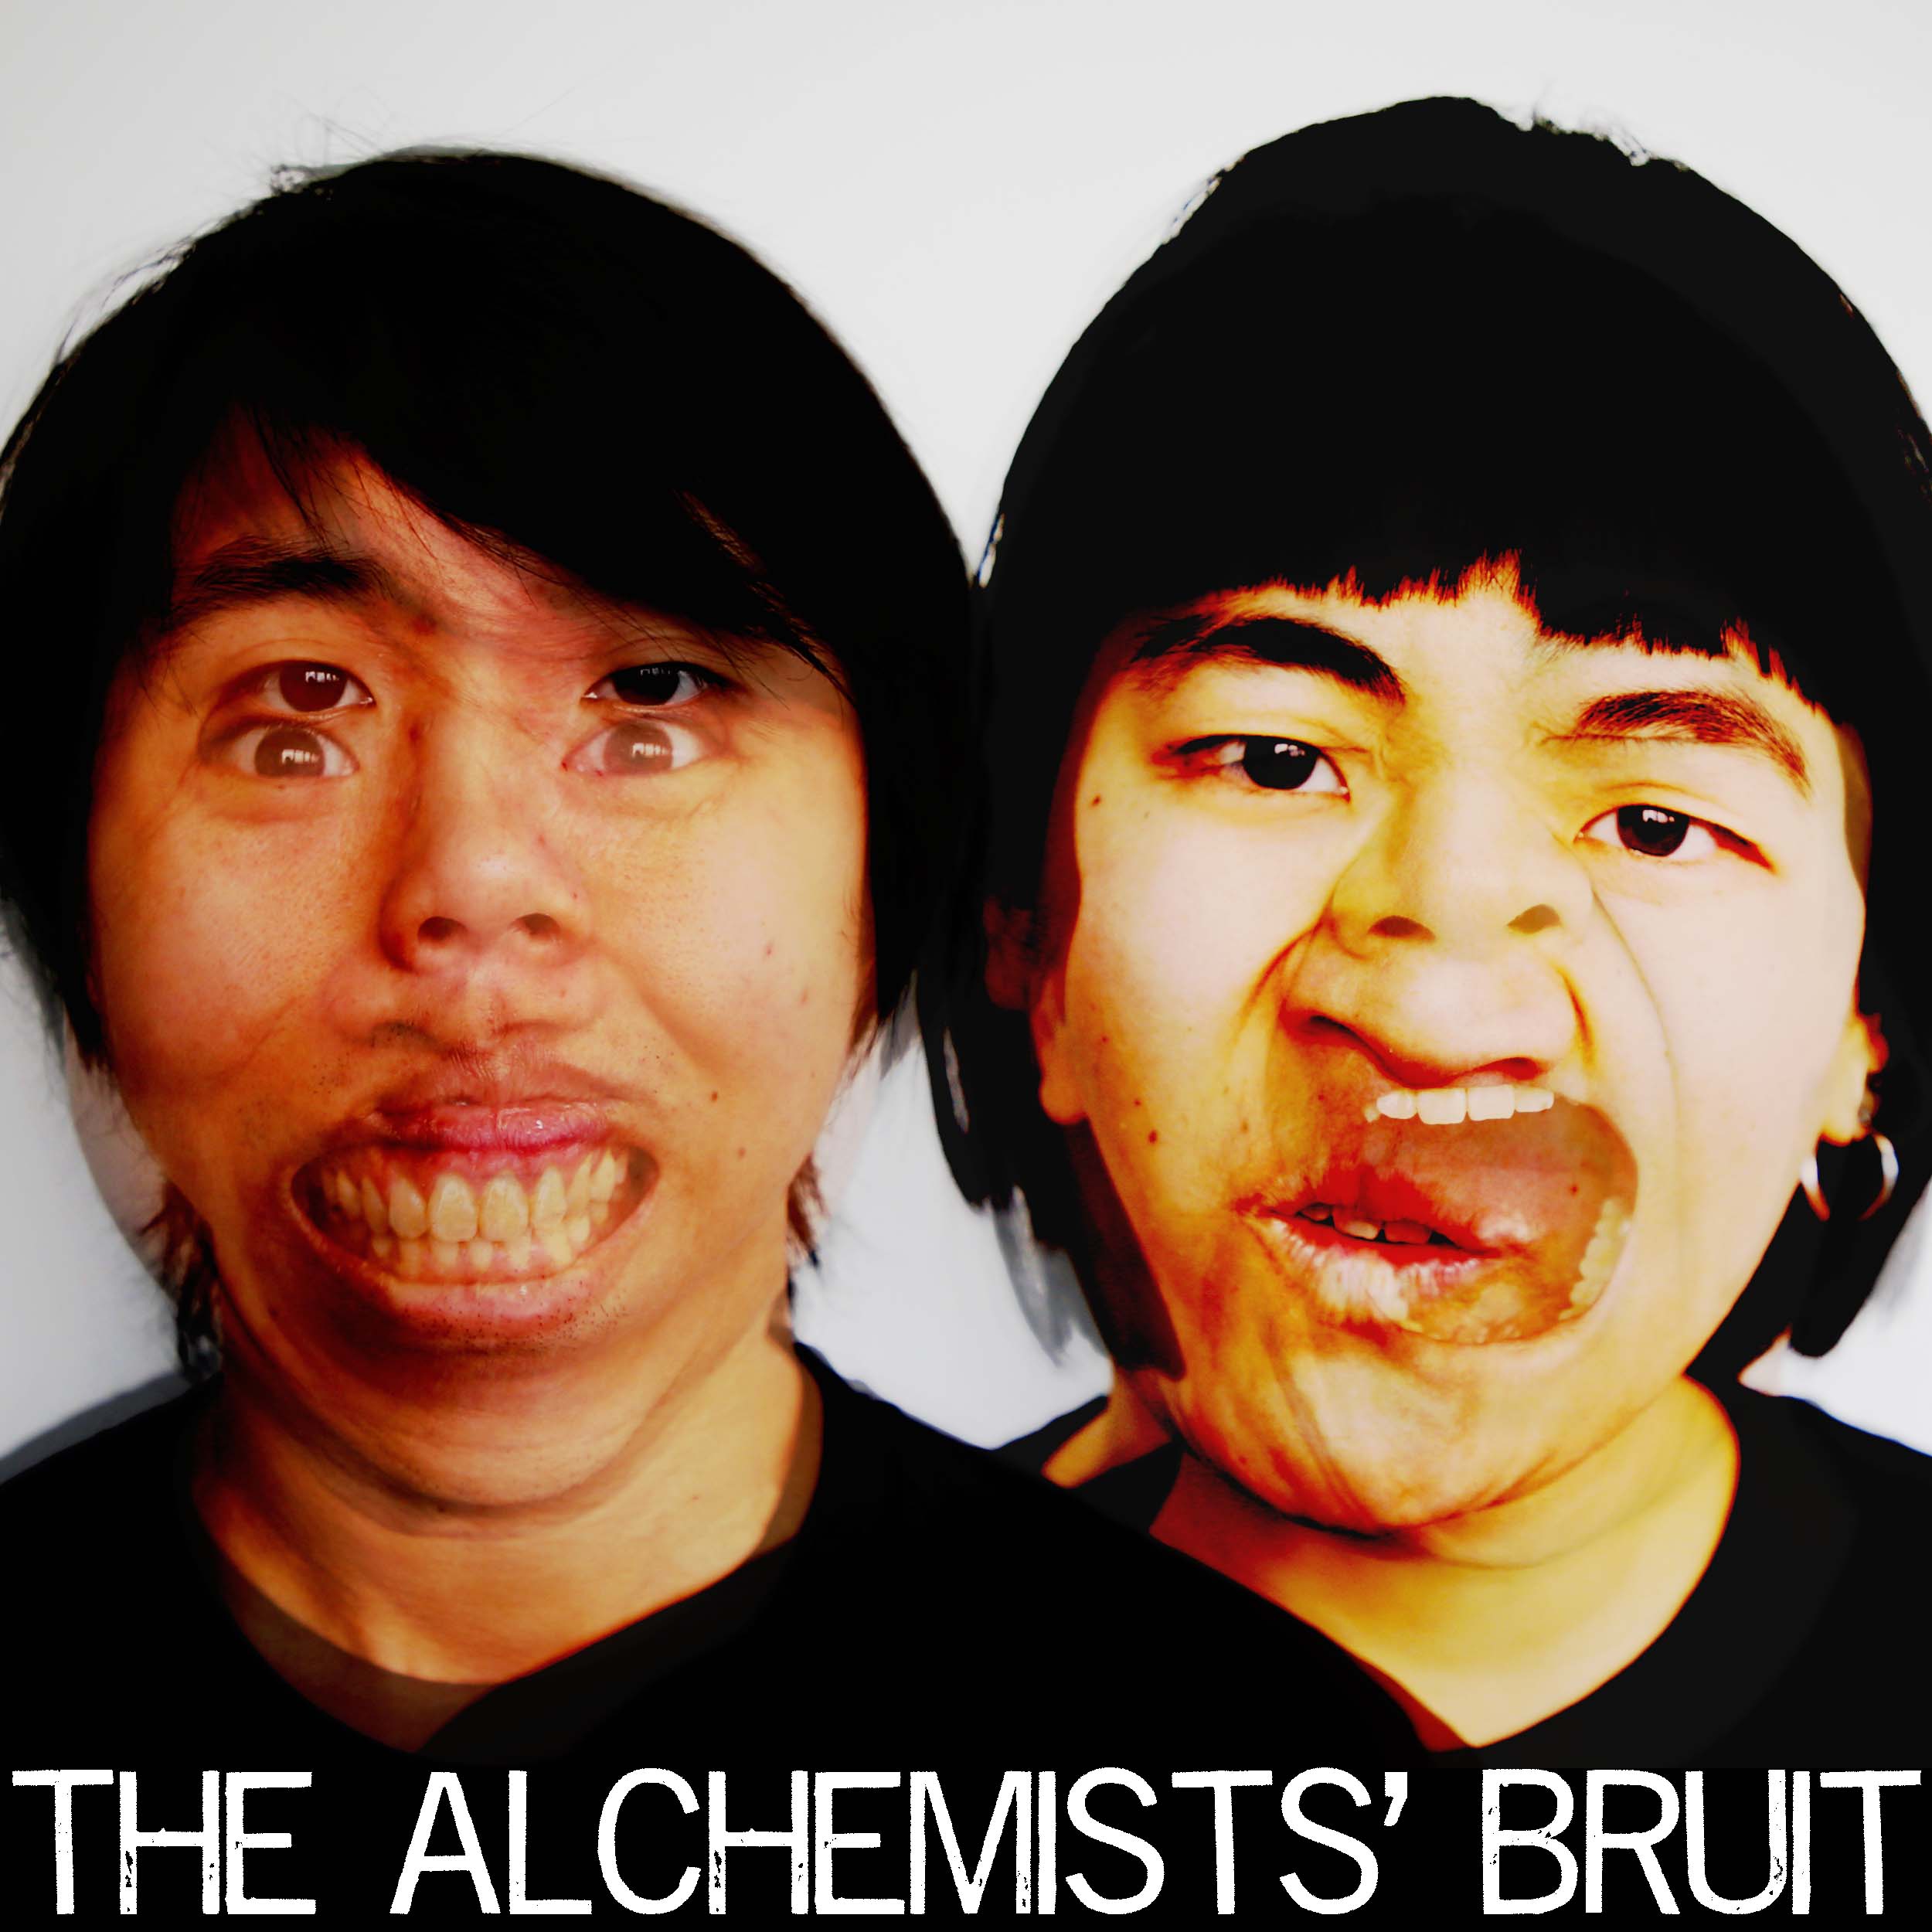 The Alchemists' Bruit